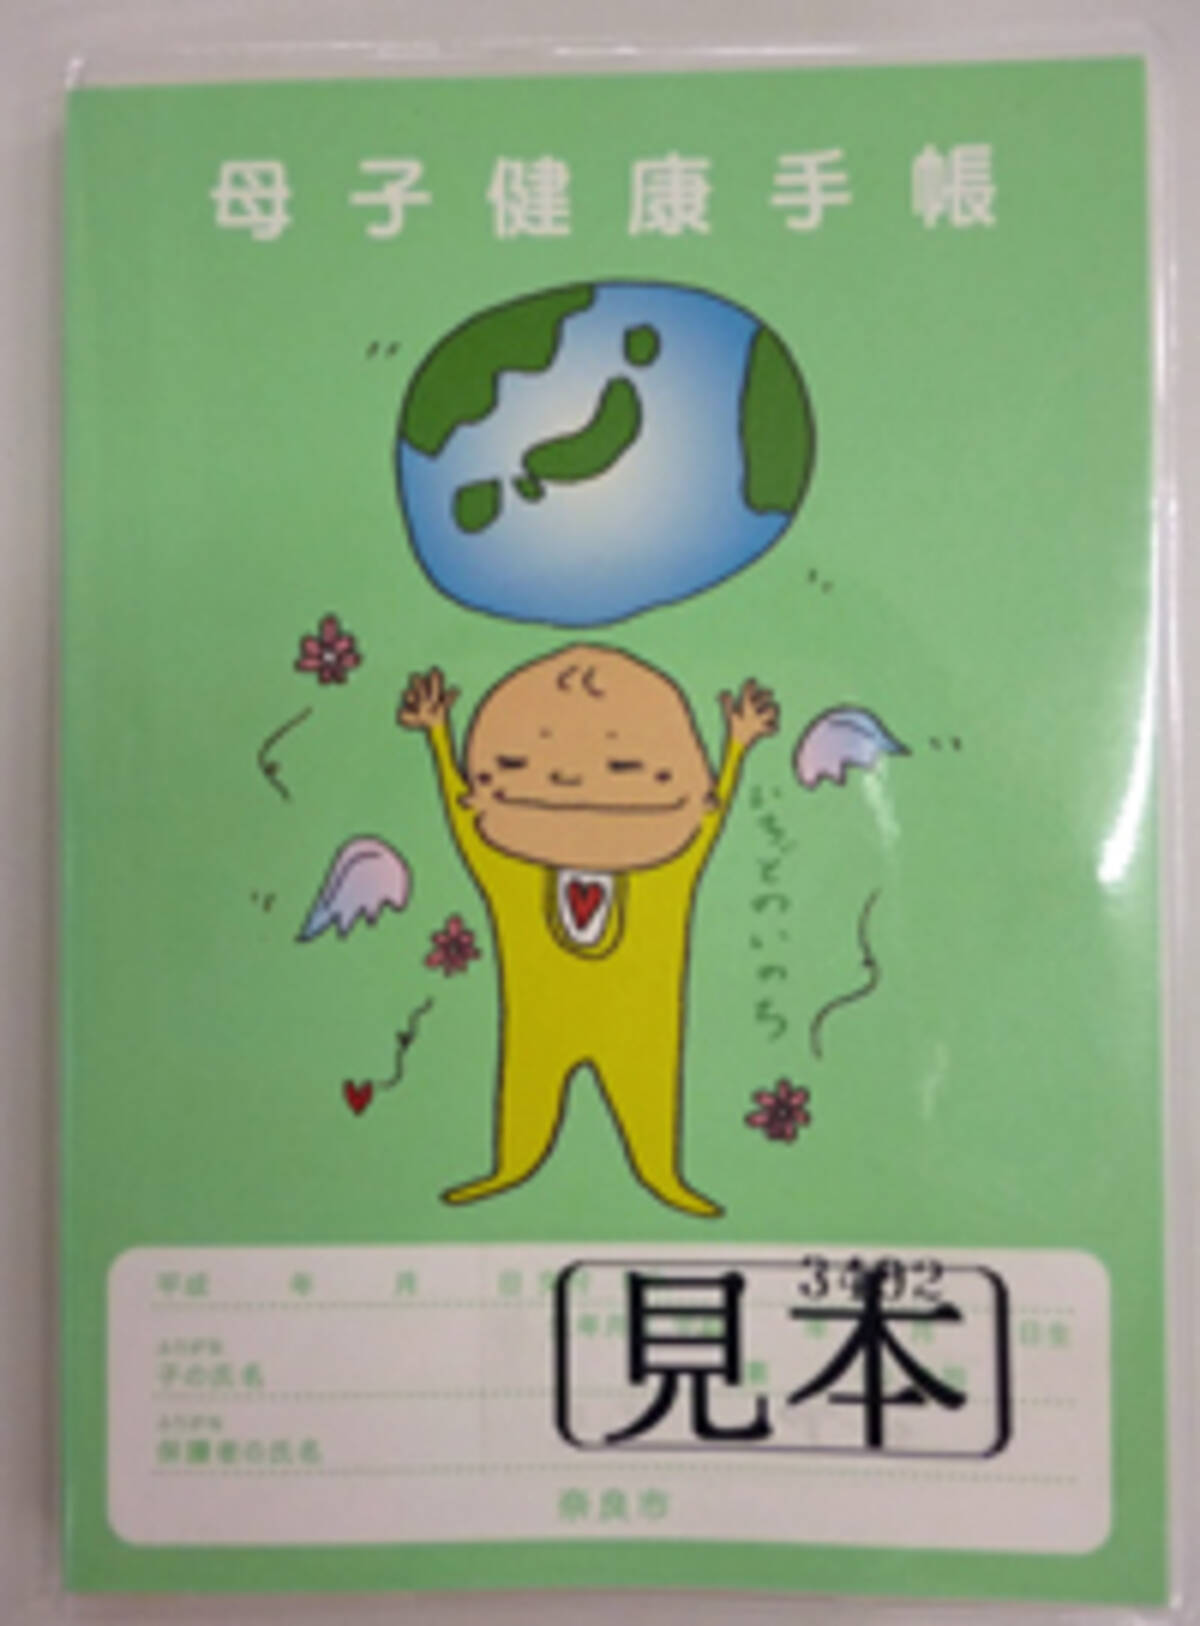 Kinki Kids 堂本剛 母子手帳をデザイン 奇跡のオファーの裏エピソード 13年3月29日 エキサイトニュース